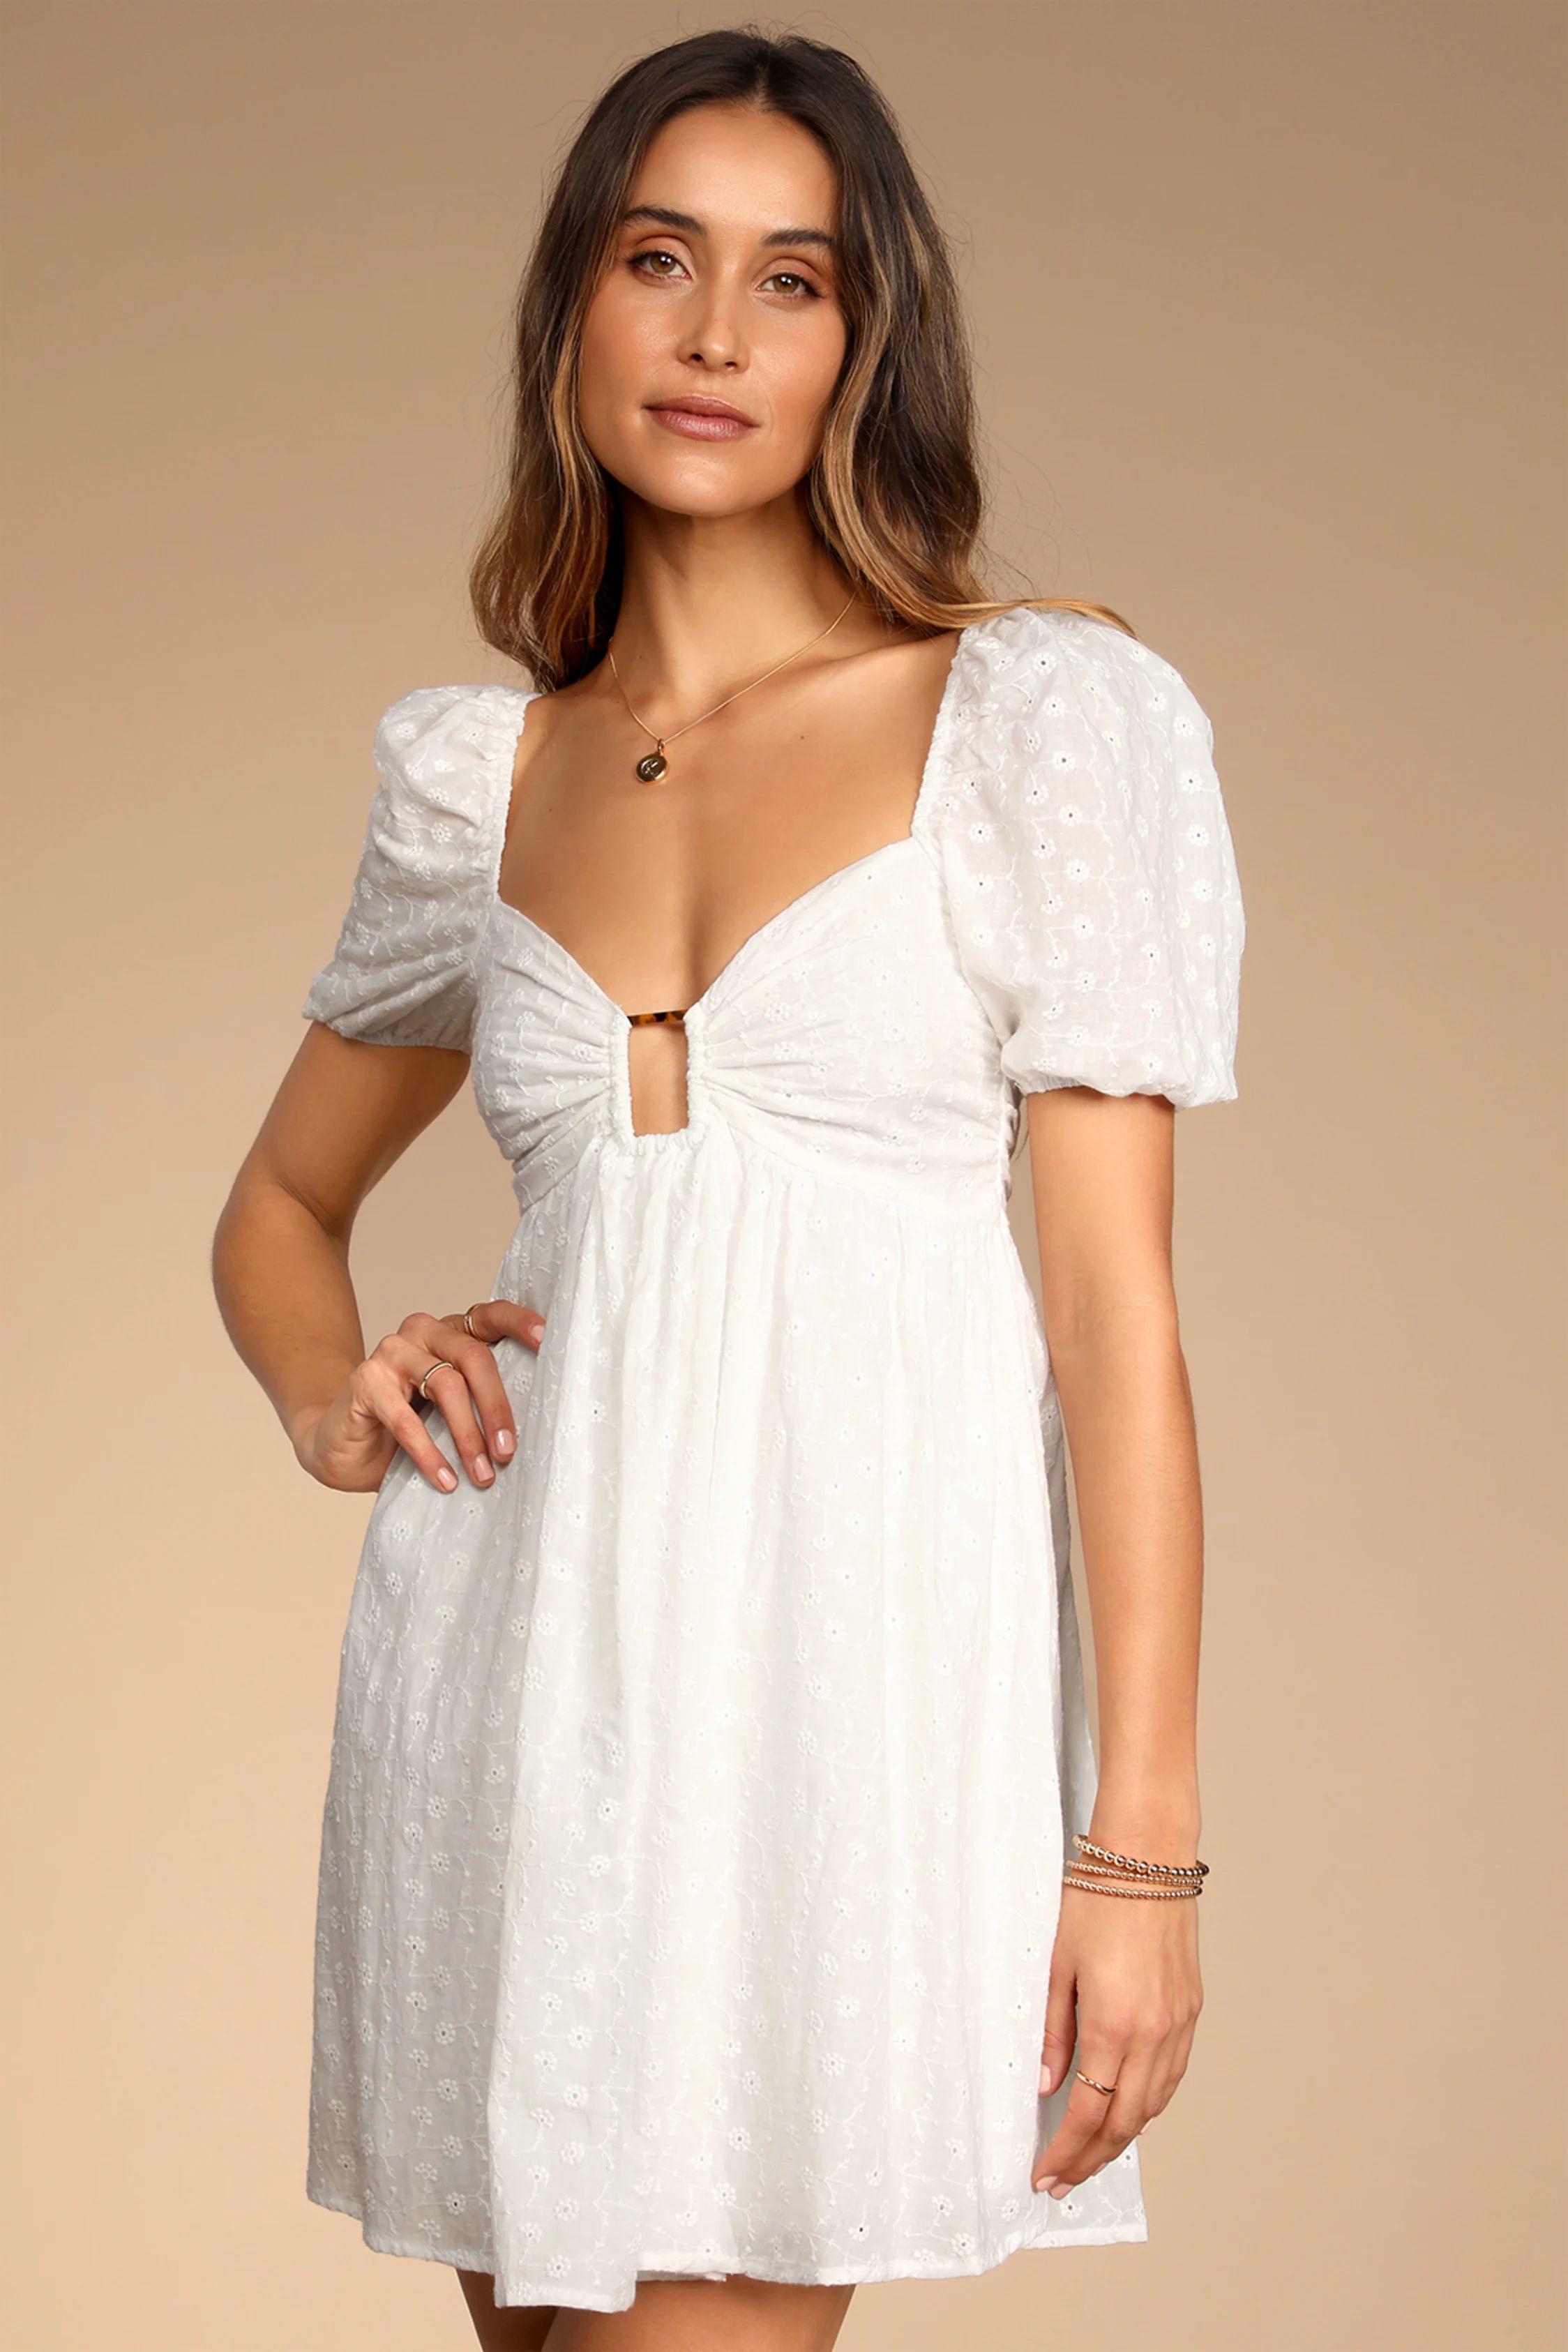 Sunny Day Stunner White Eyelet Embroidered Babydoll Dress | Lulus